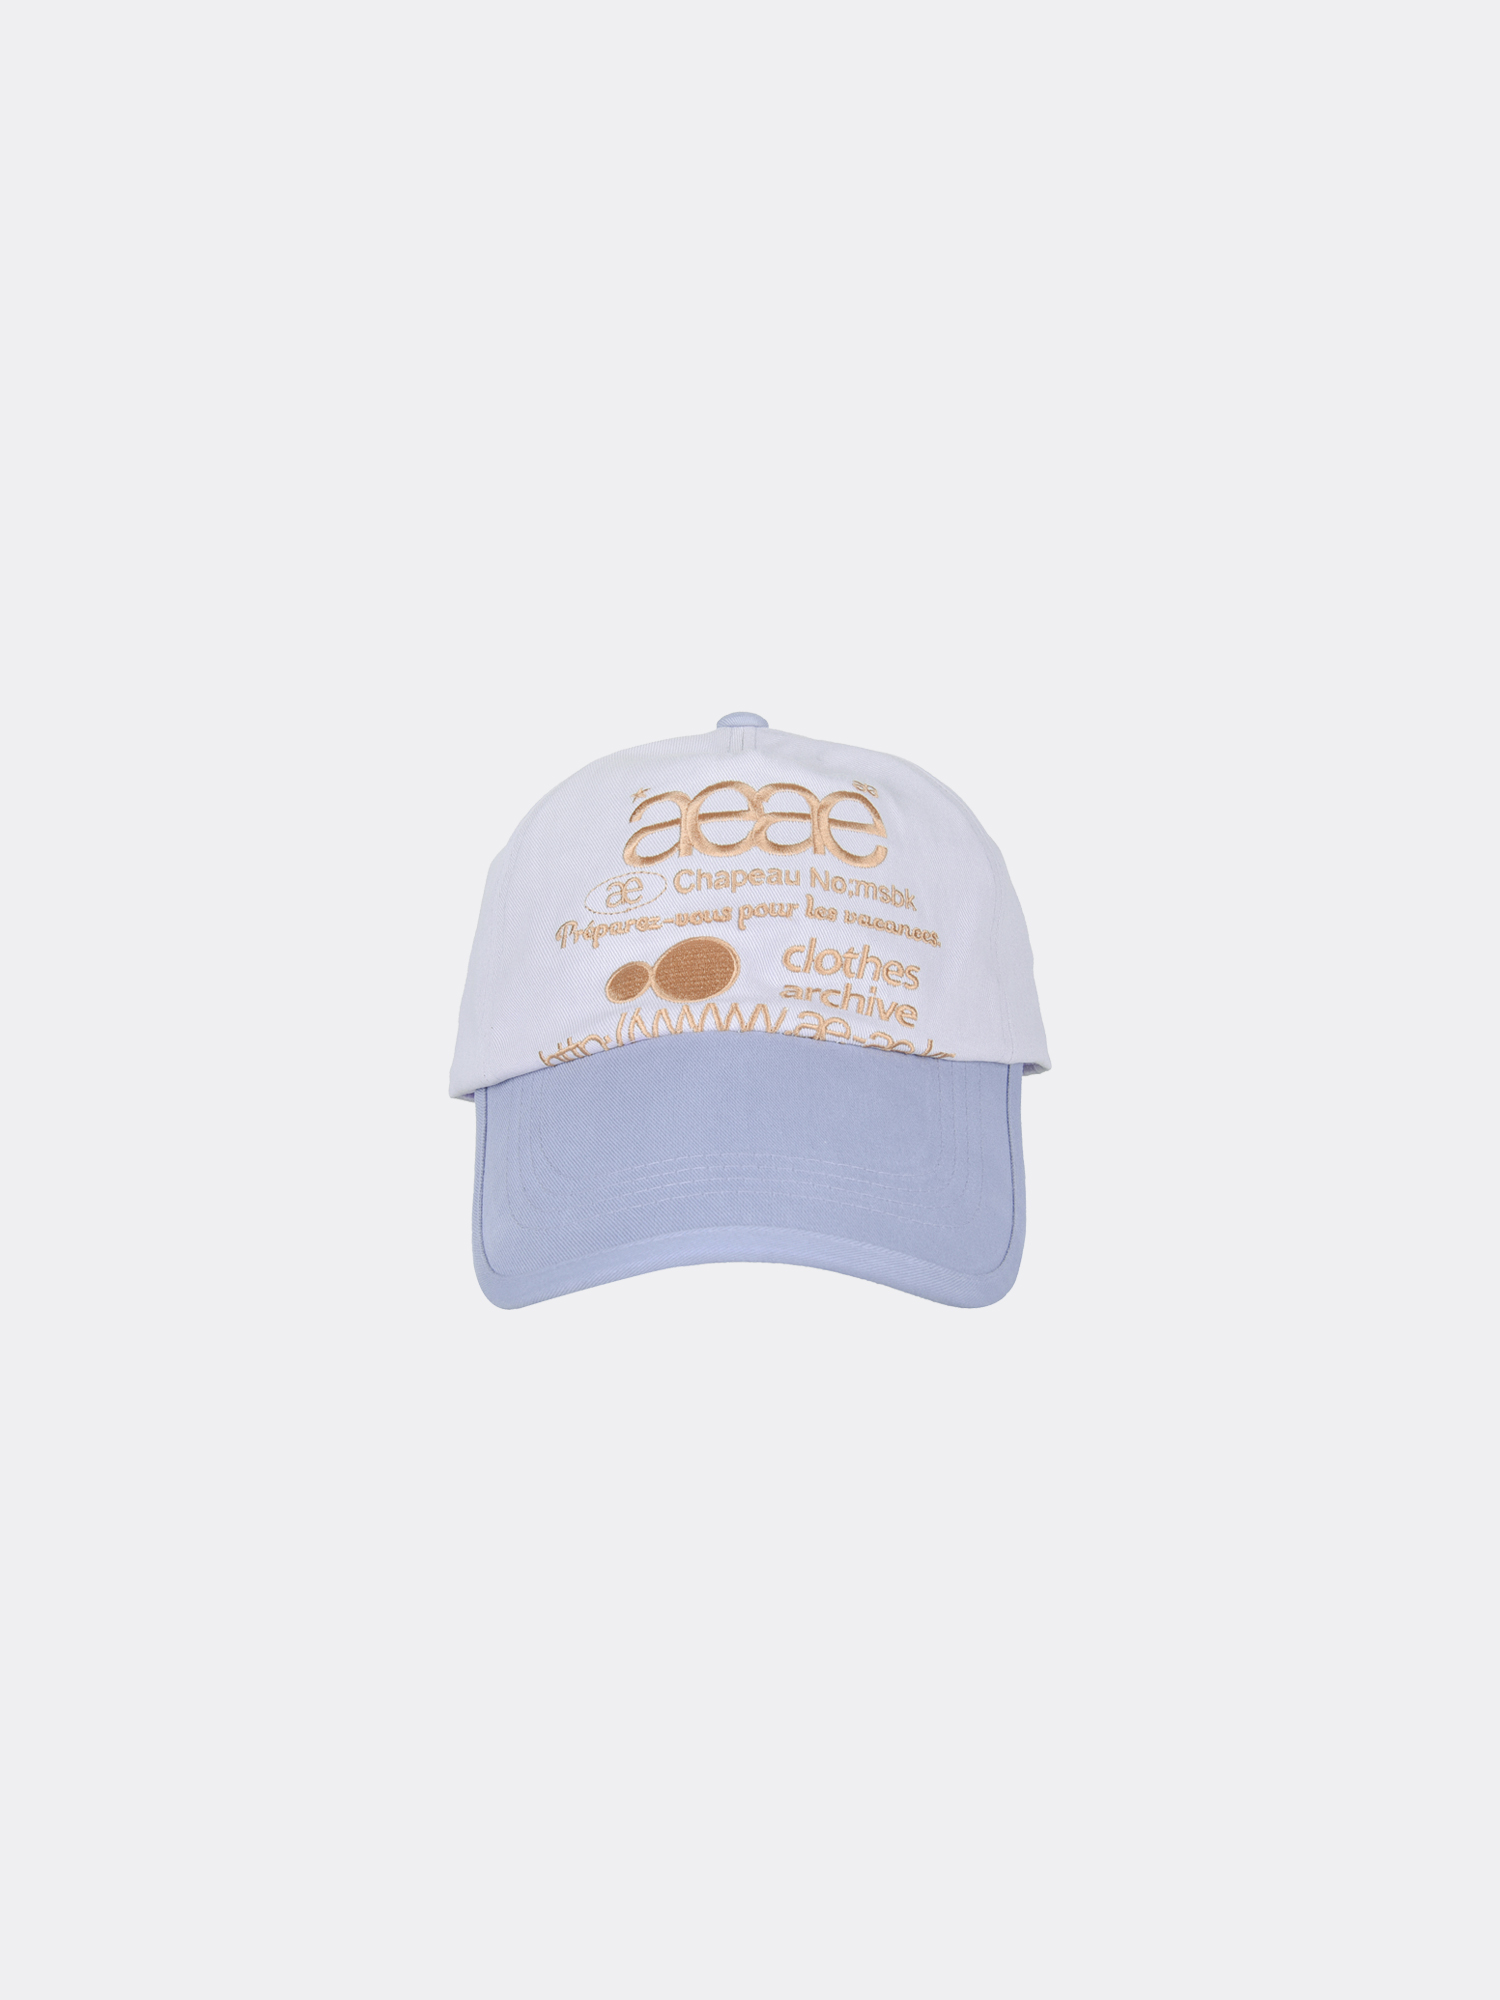 aeae WEB LOGO 5 PANNEL BALL CAP-GREYISH PURPLE